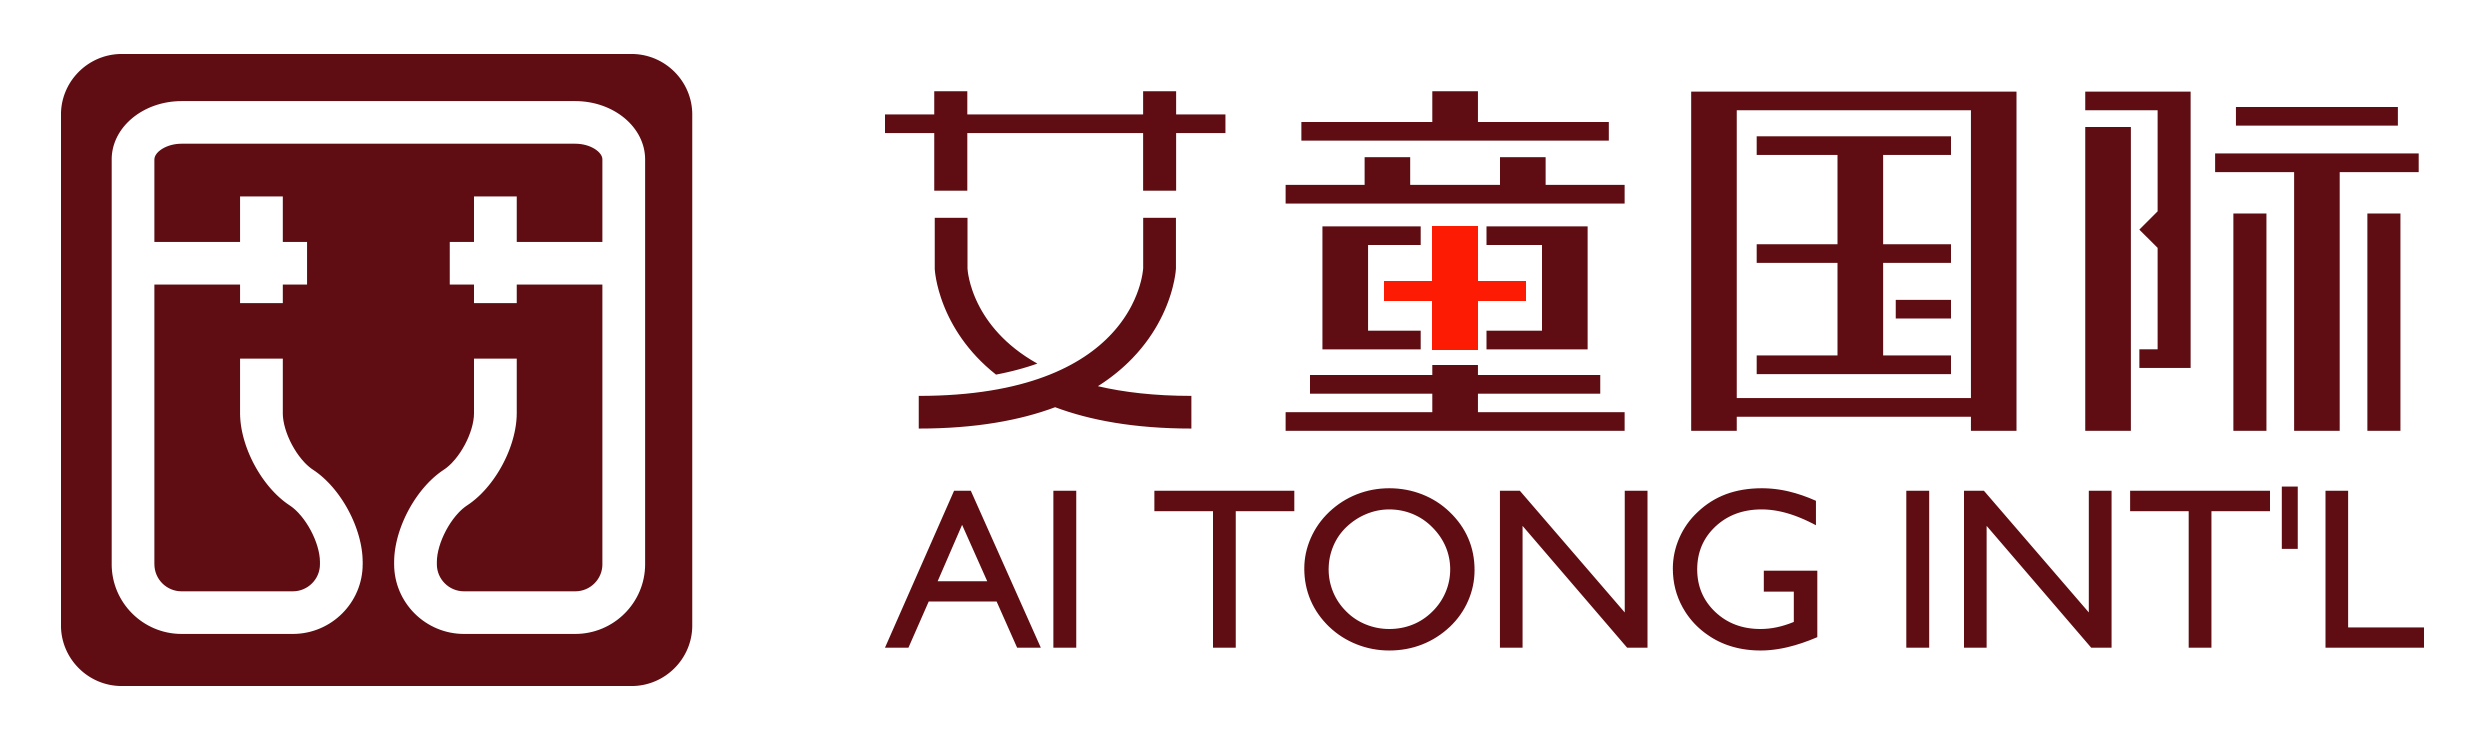 艾童国际logo.png